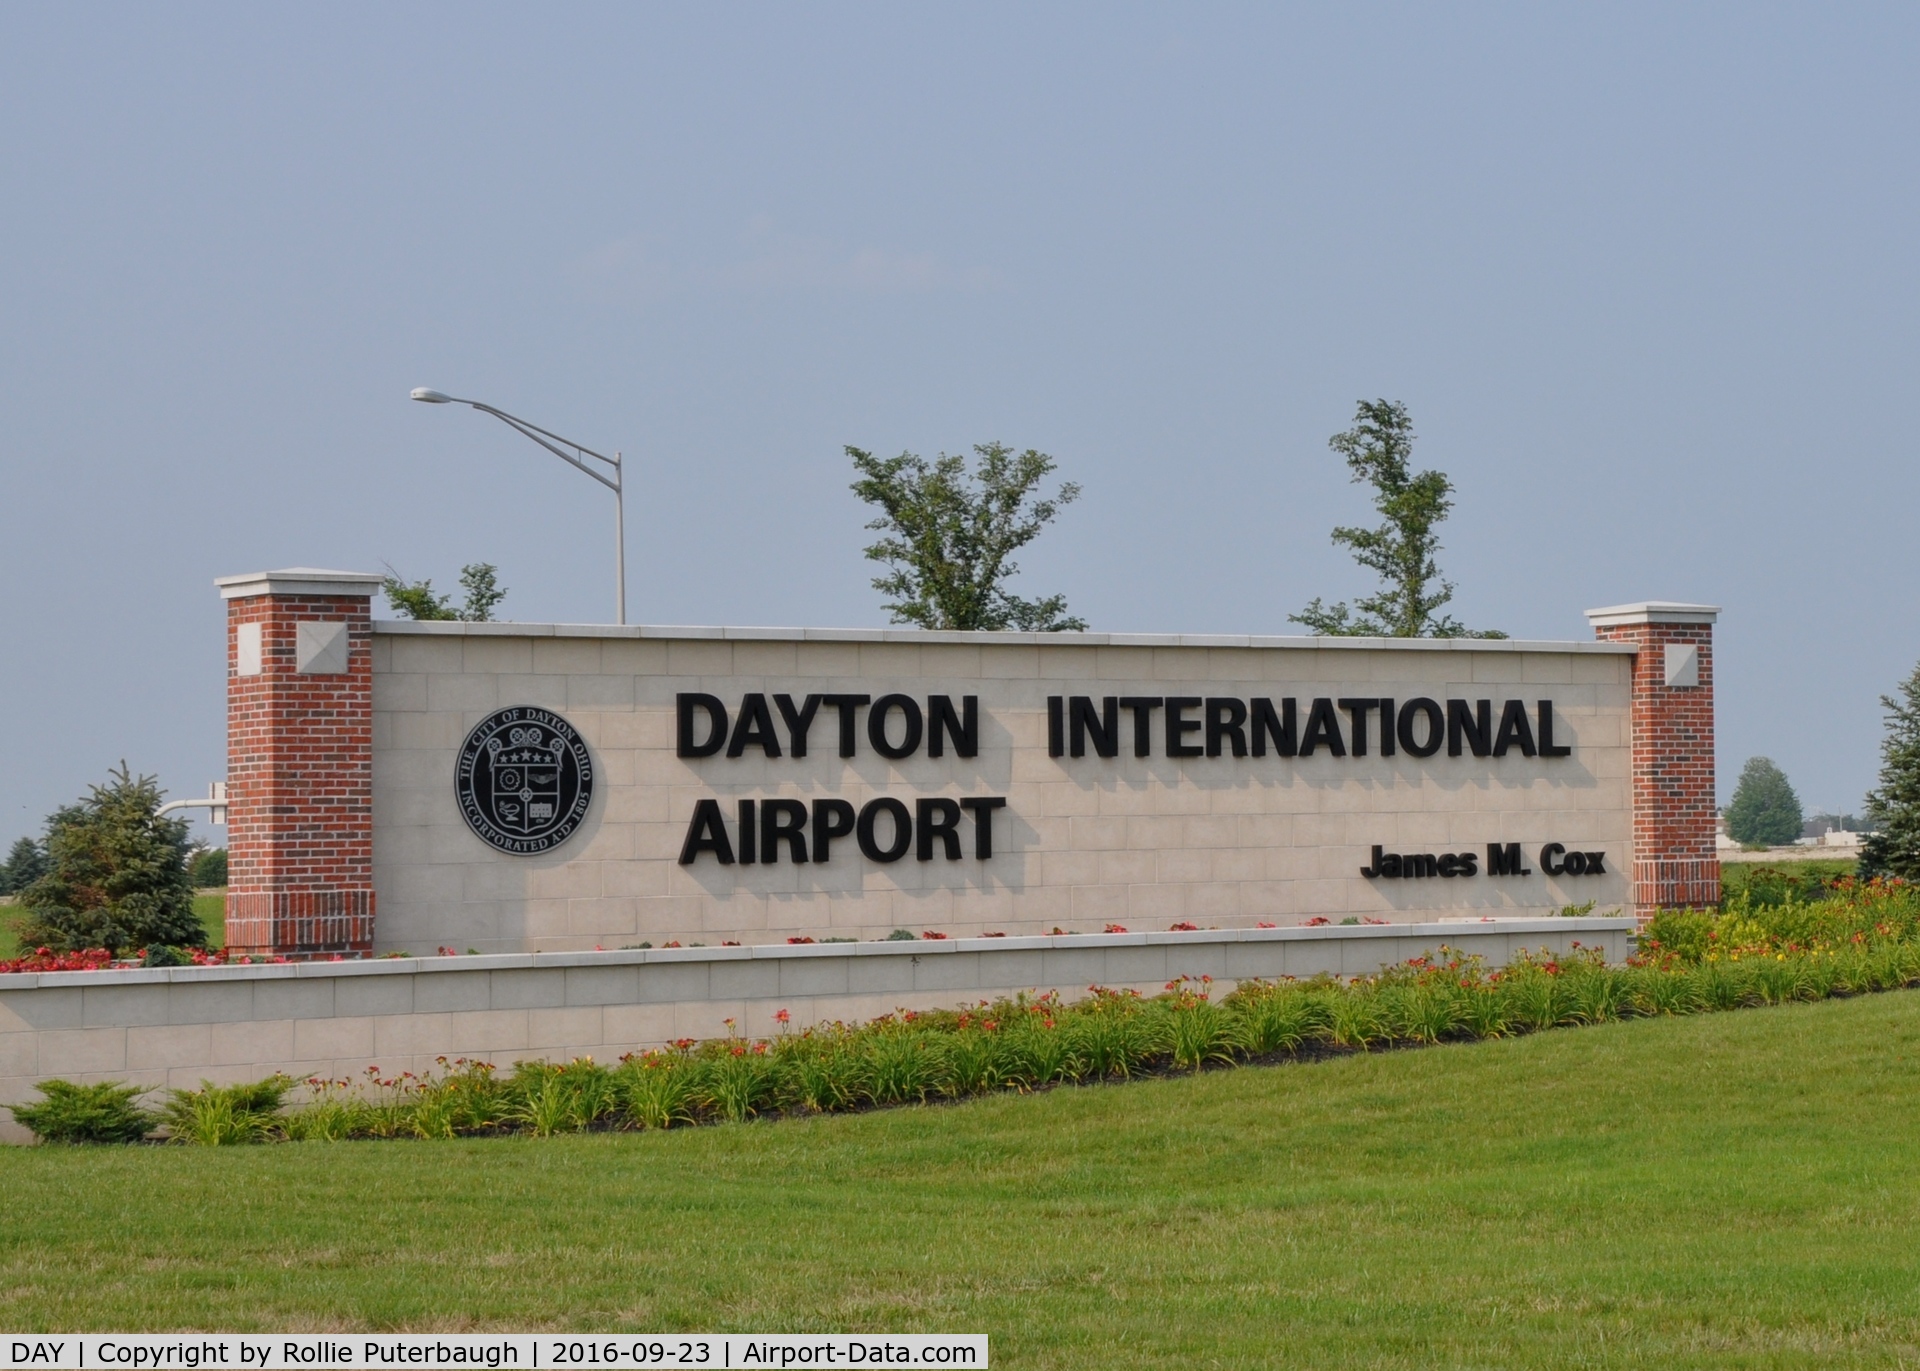 James M Cox Dayton International Airport (DAY) - Entrance to the Dayton International Airport ~ Vandalia, Ohio. Visit my aviation blog by copy/paste: https://steemit.com/@rollie13 .